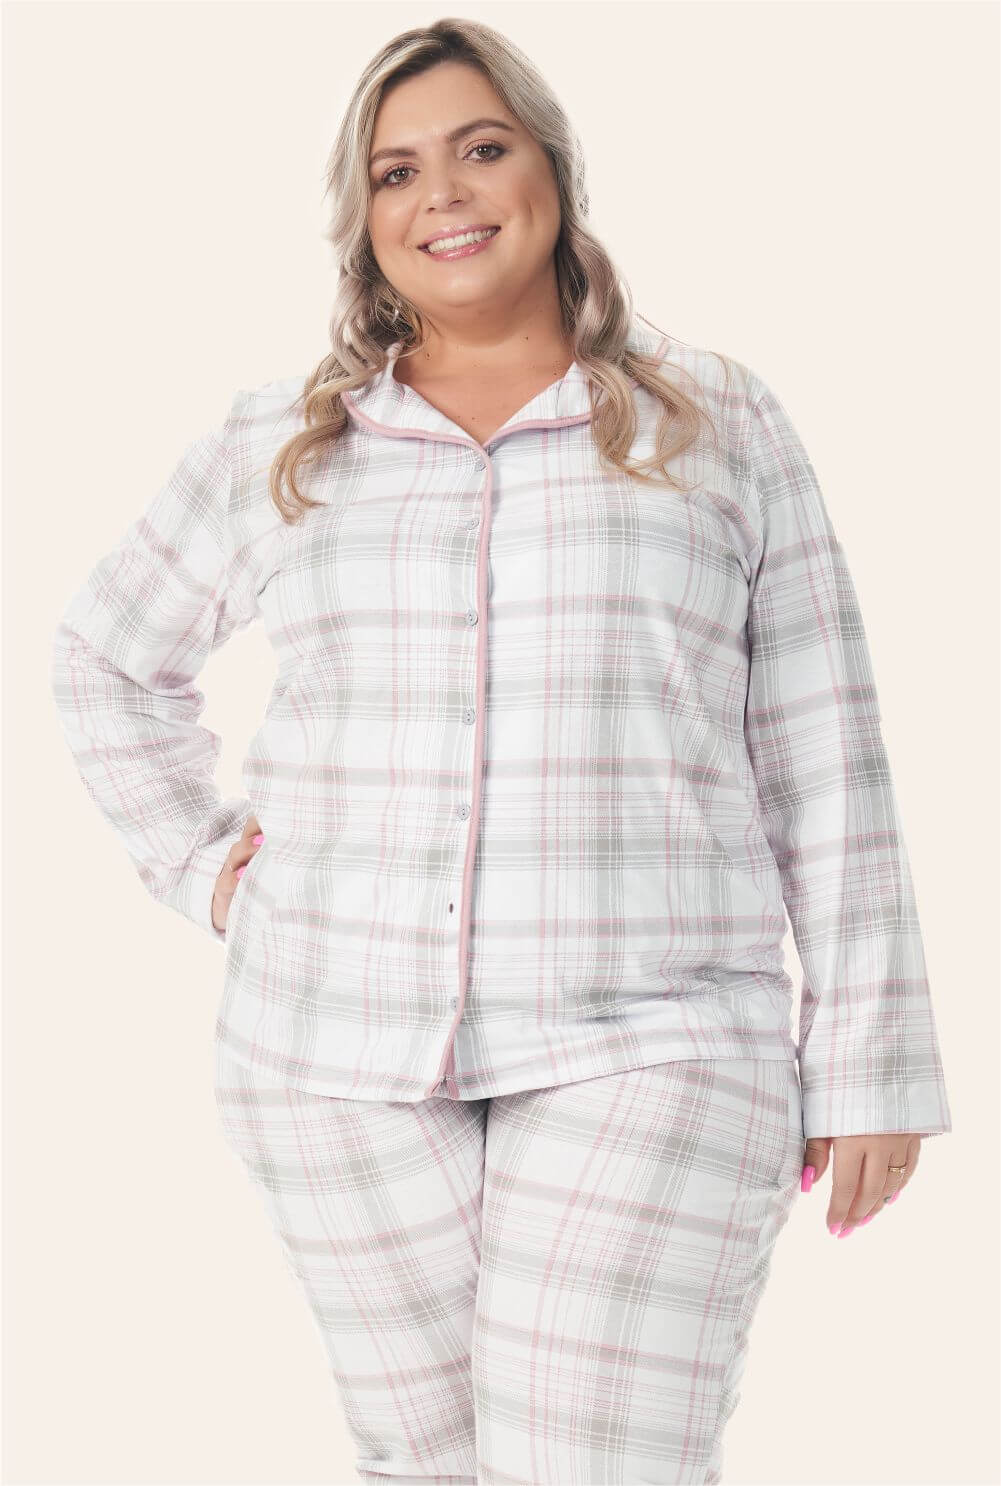 022/D - Pijama Americano Adulto Feminino Plus Size Rosa Xadrez - Bela Notte